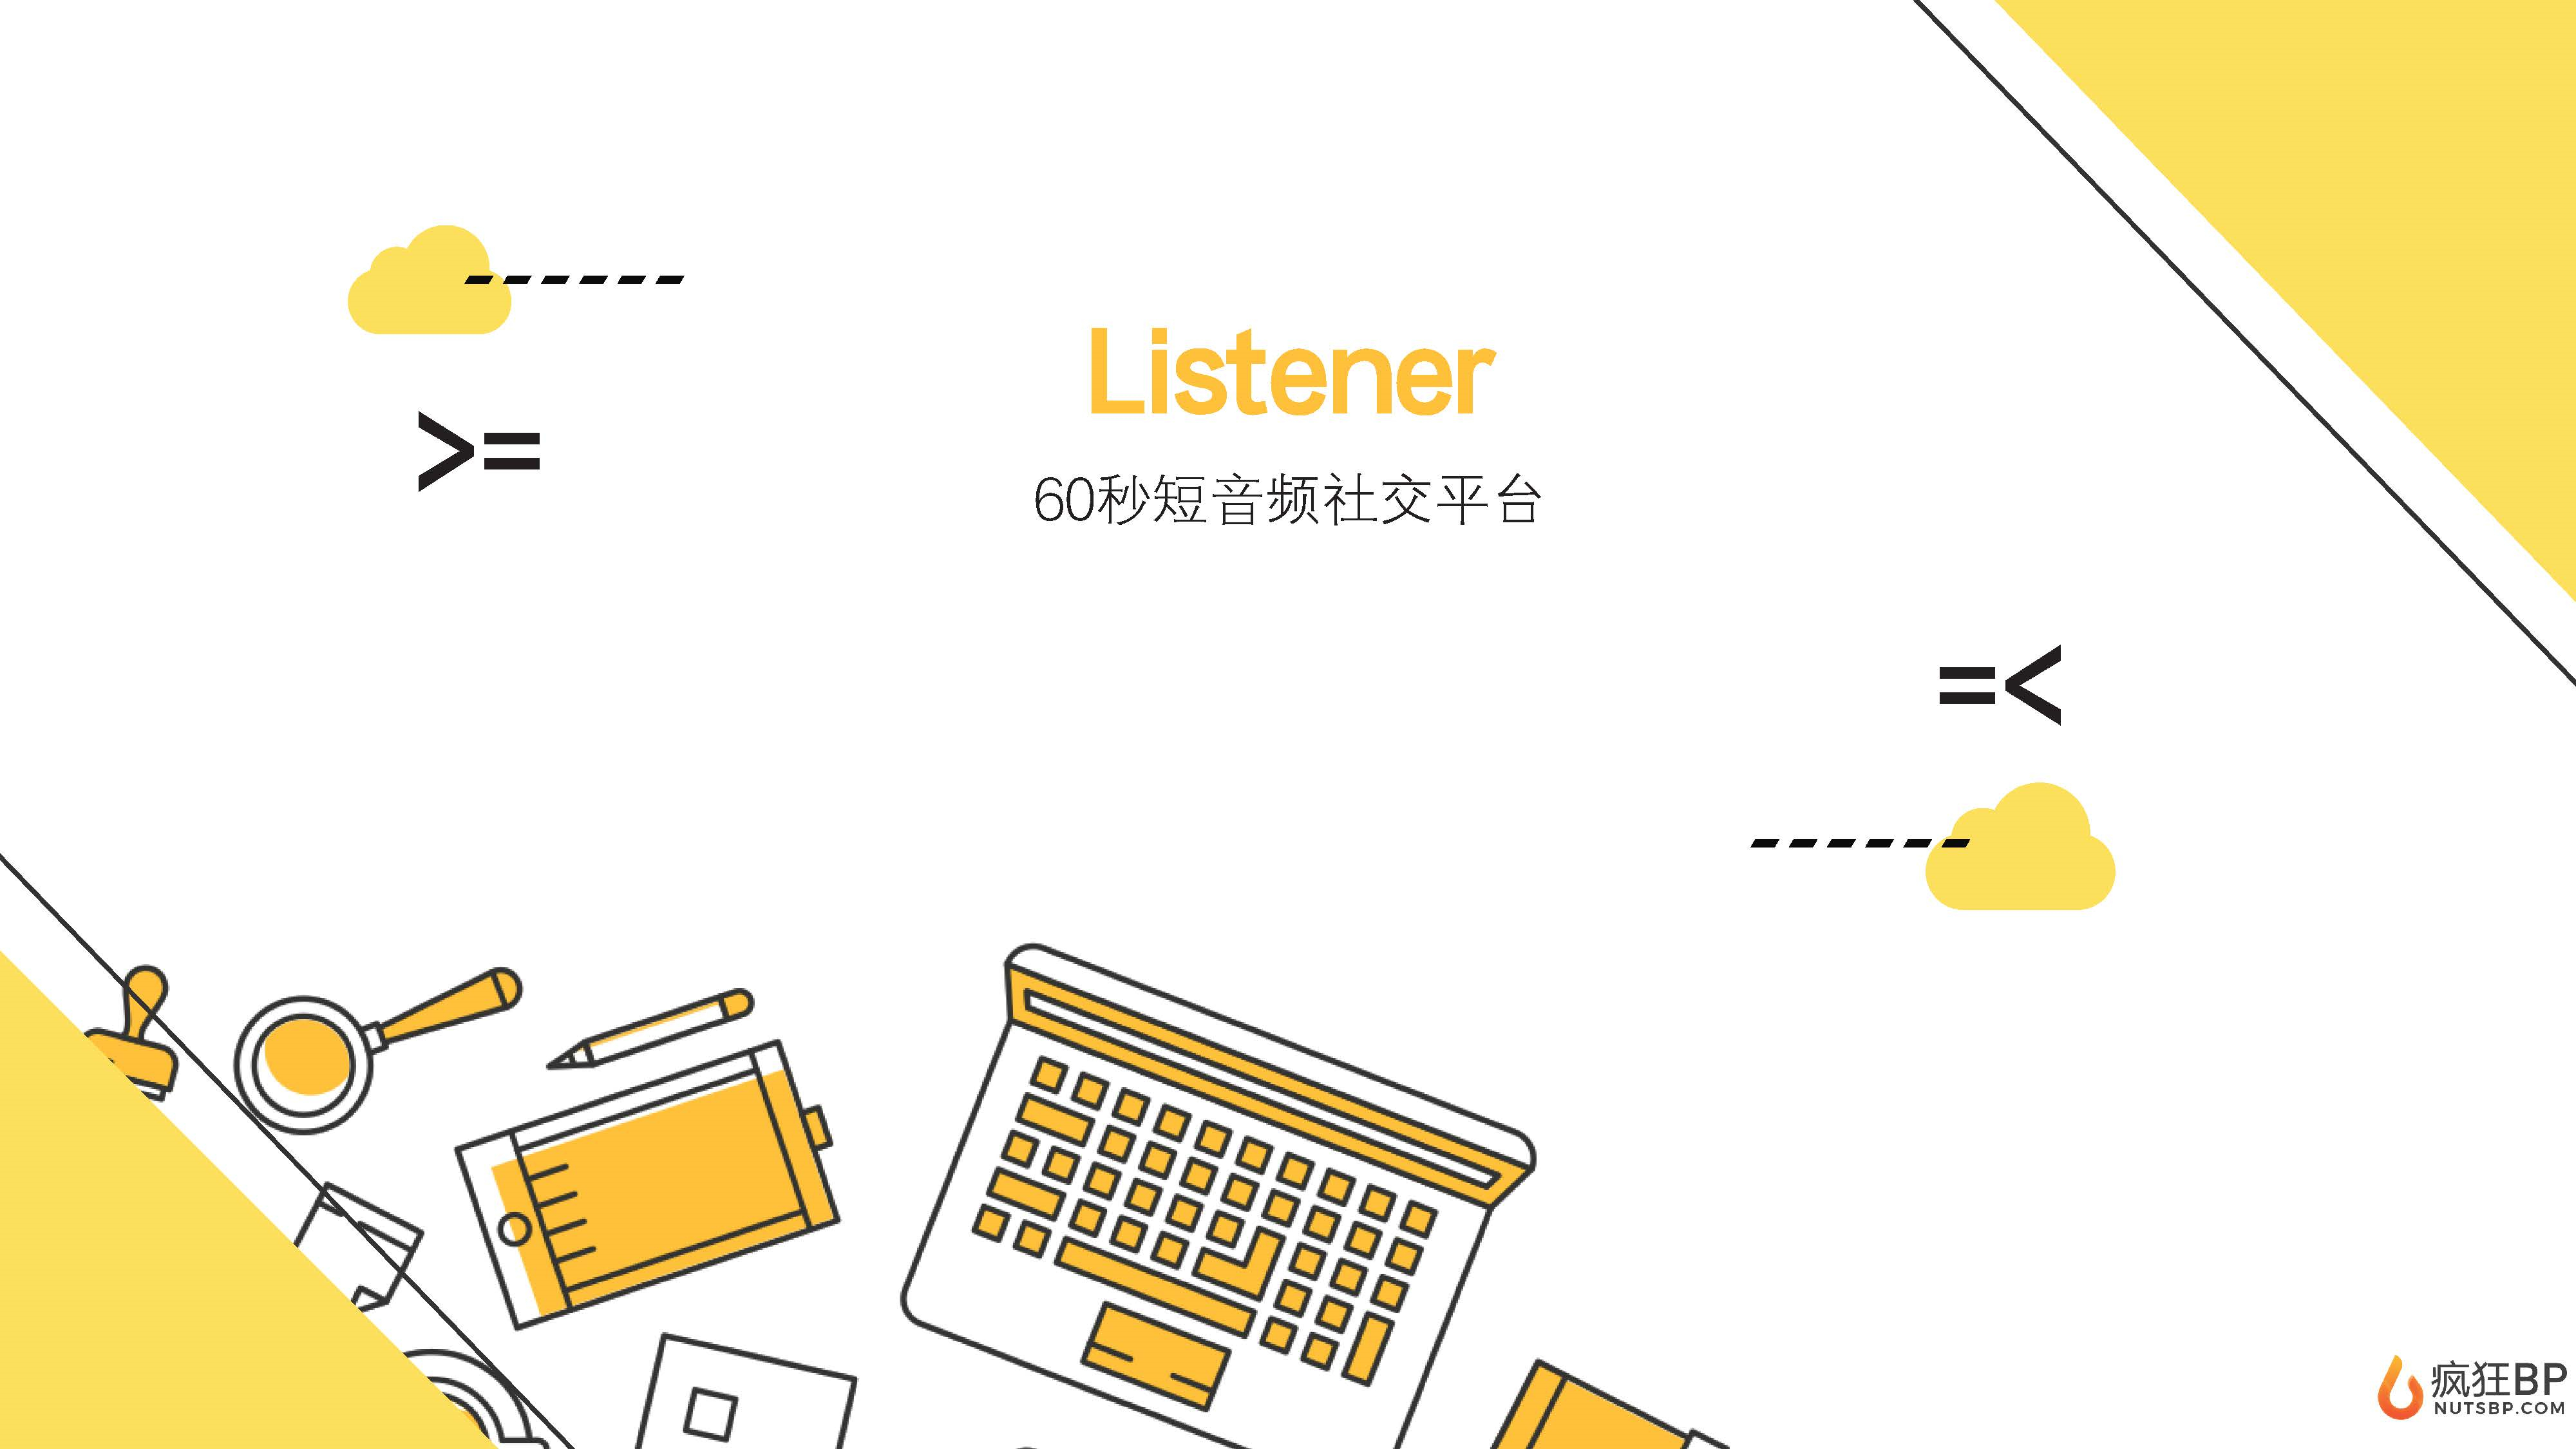 短音频社交“listener”商业计划书-undefined